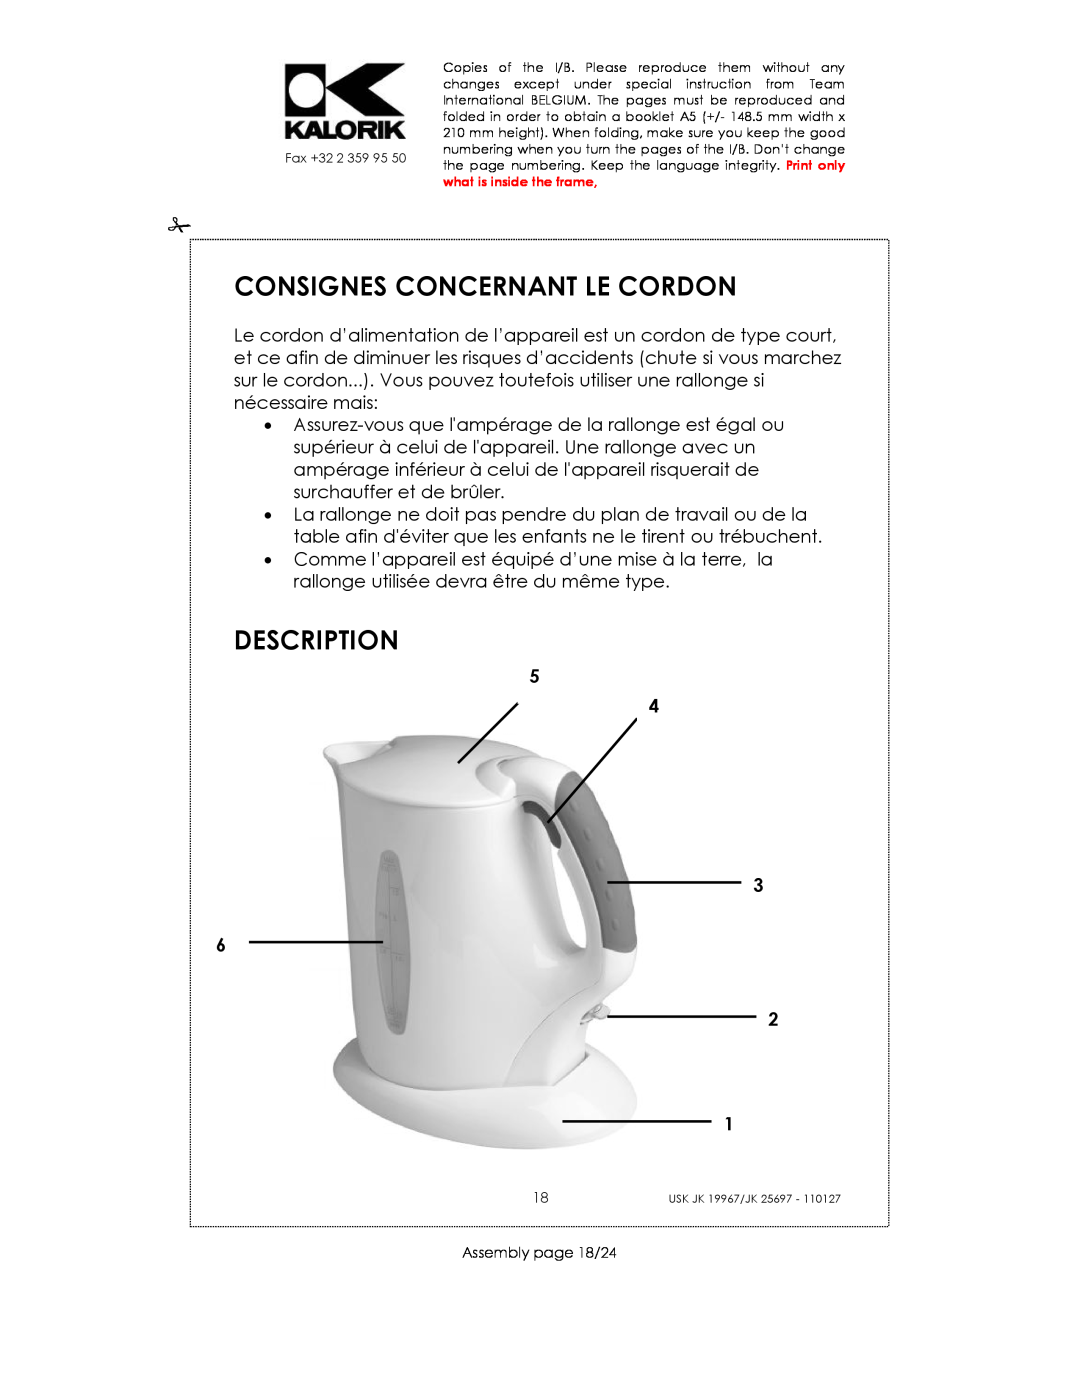 Kalorik JK 19967, JK 25697 manual Consignes Concernant Le Cordon, Description, Assembly page 18/24 